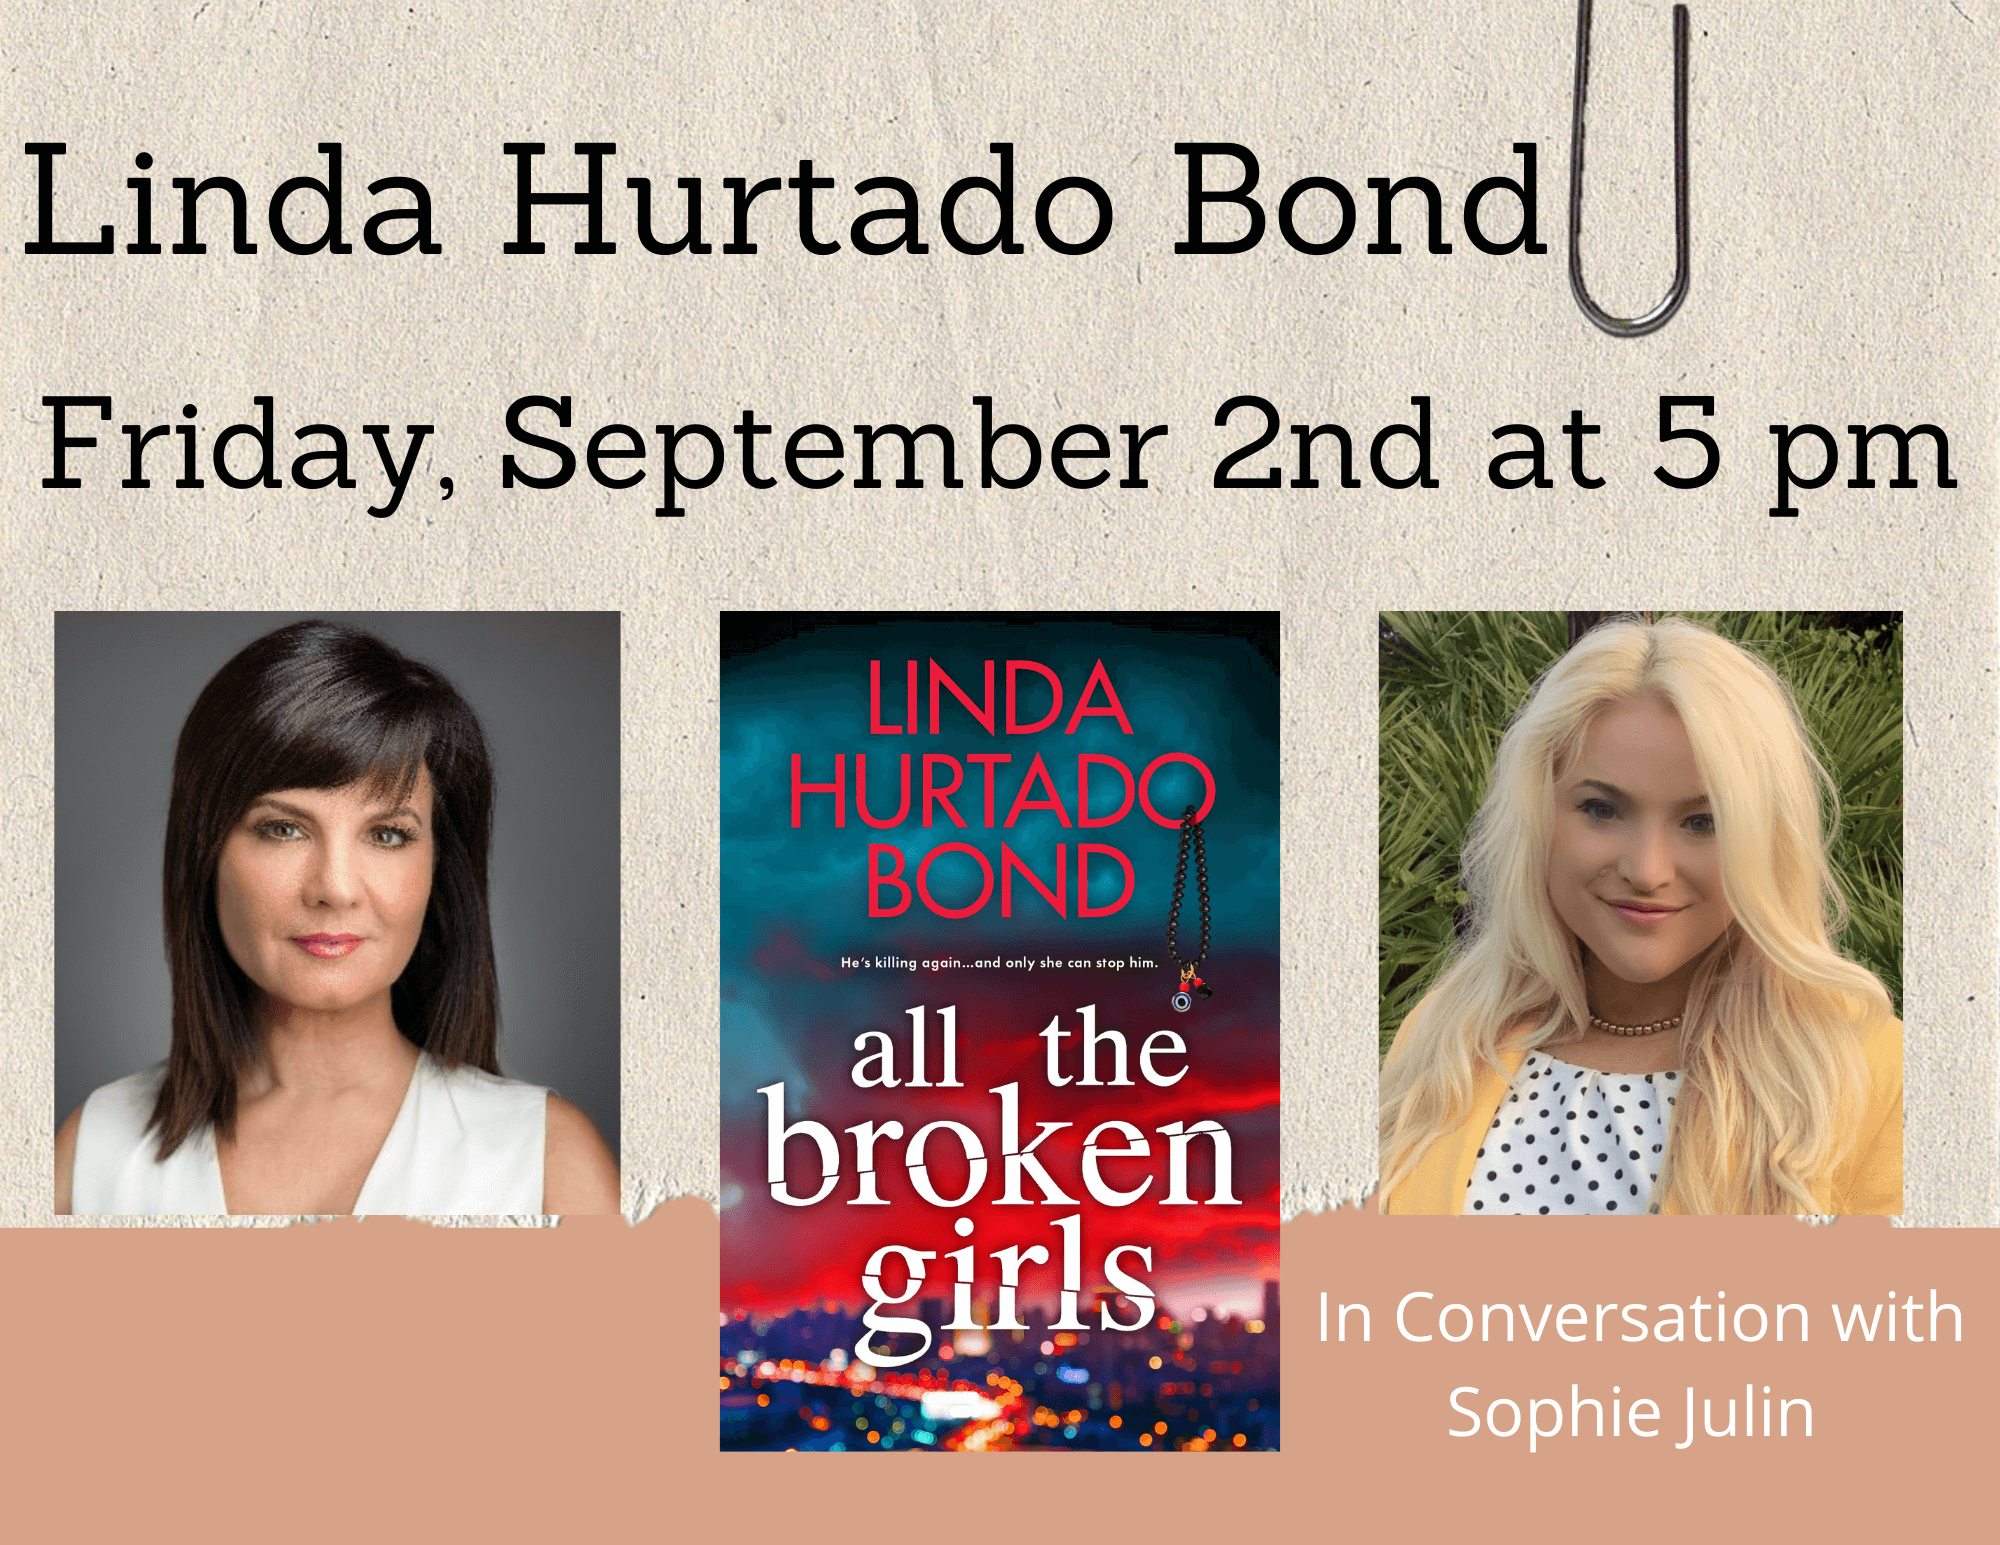 Linda hurtado Bond in conversation with Sophie Julen